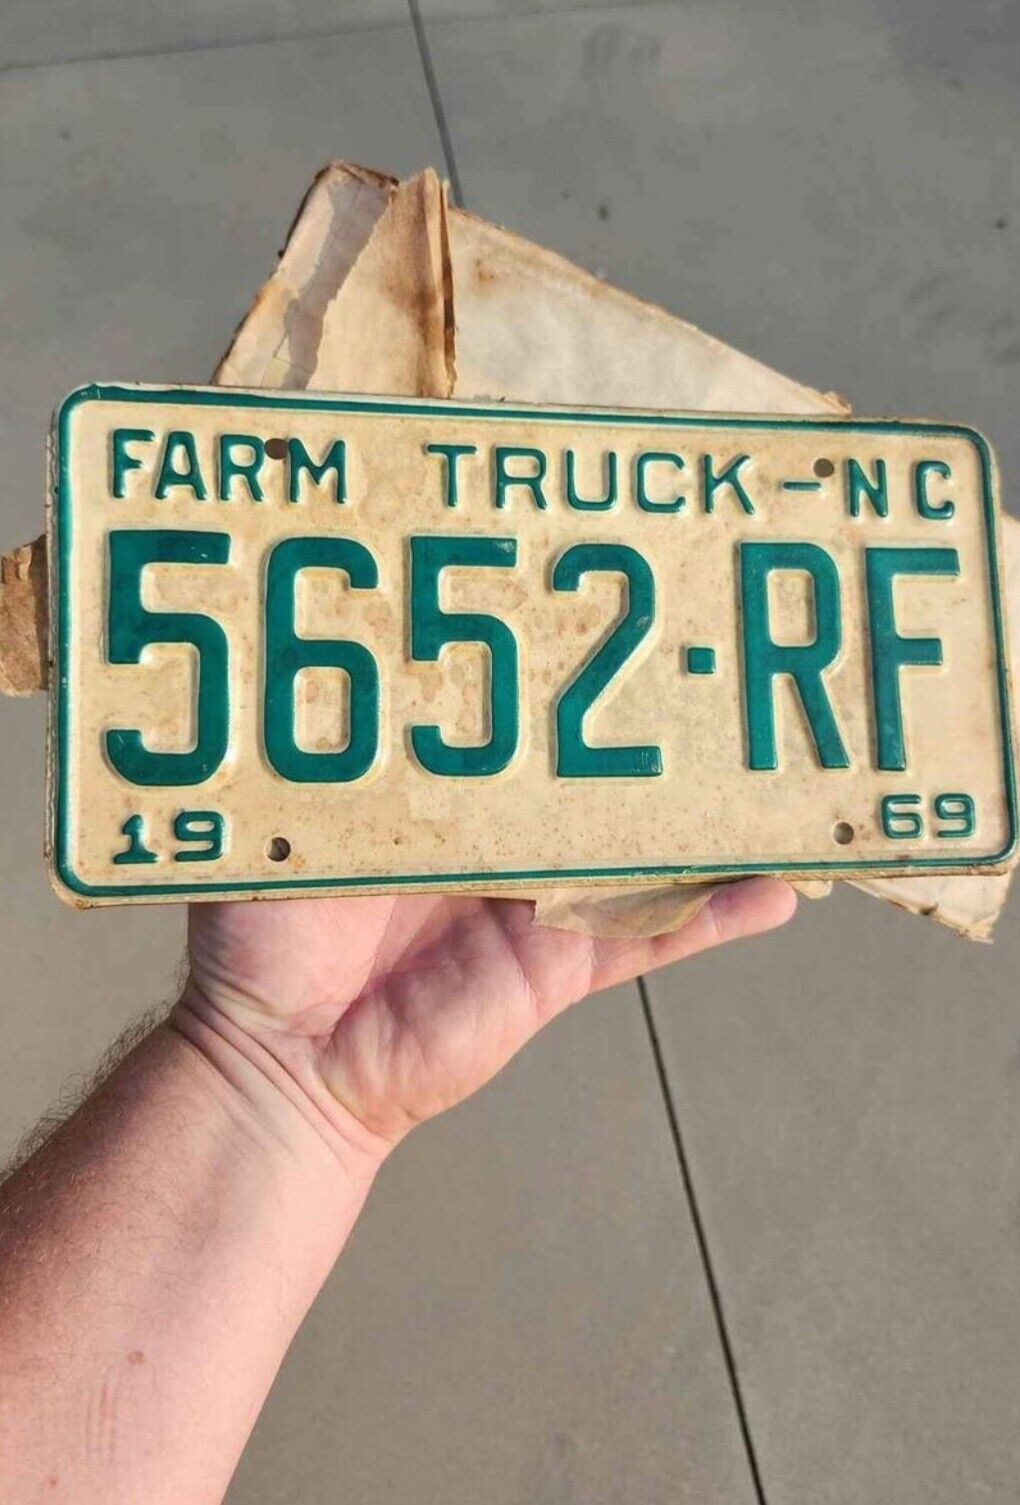 1969 North Carolina Farm Truck License Plate very good